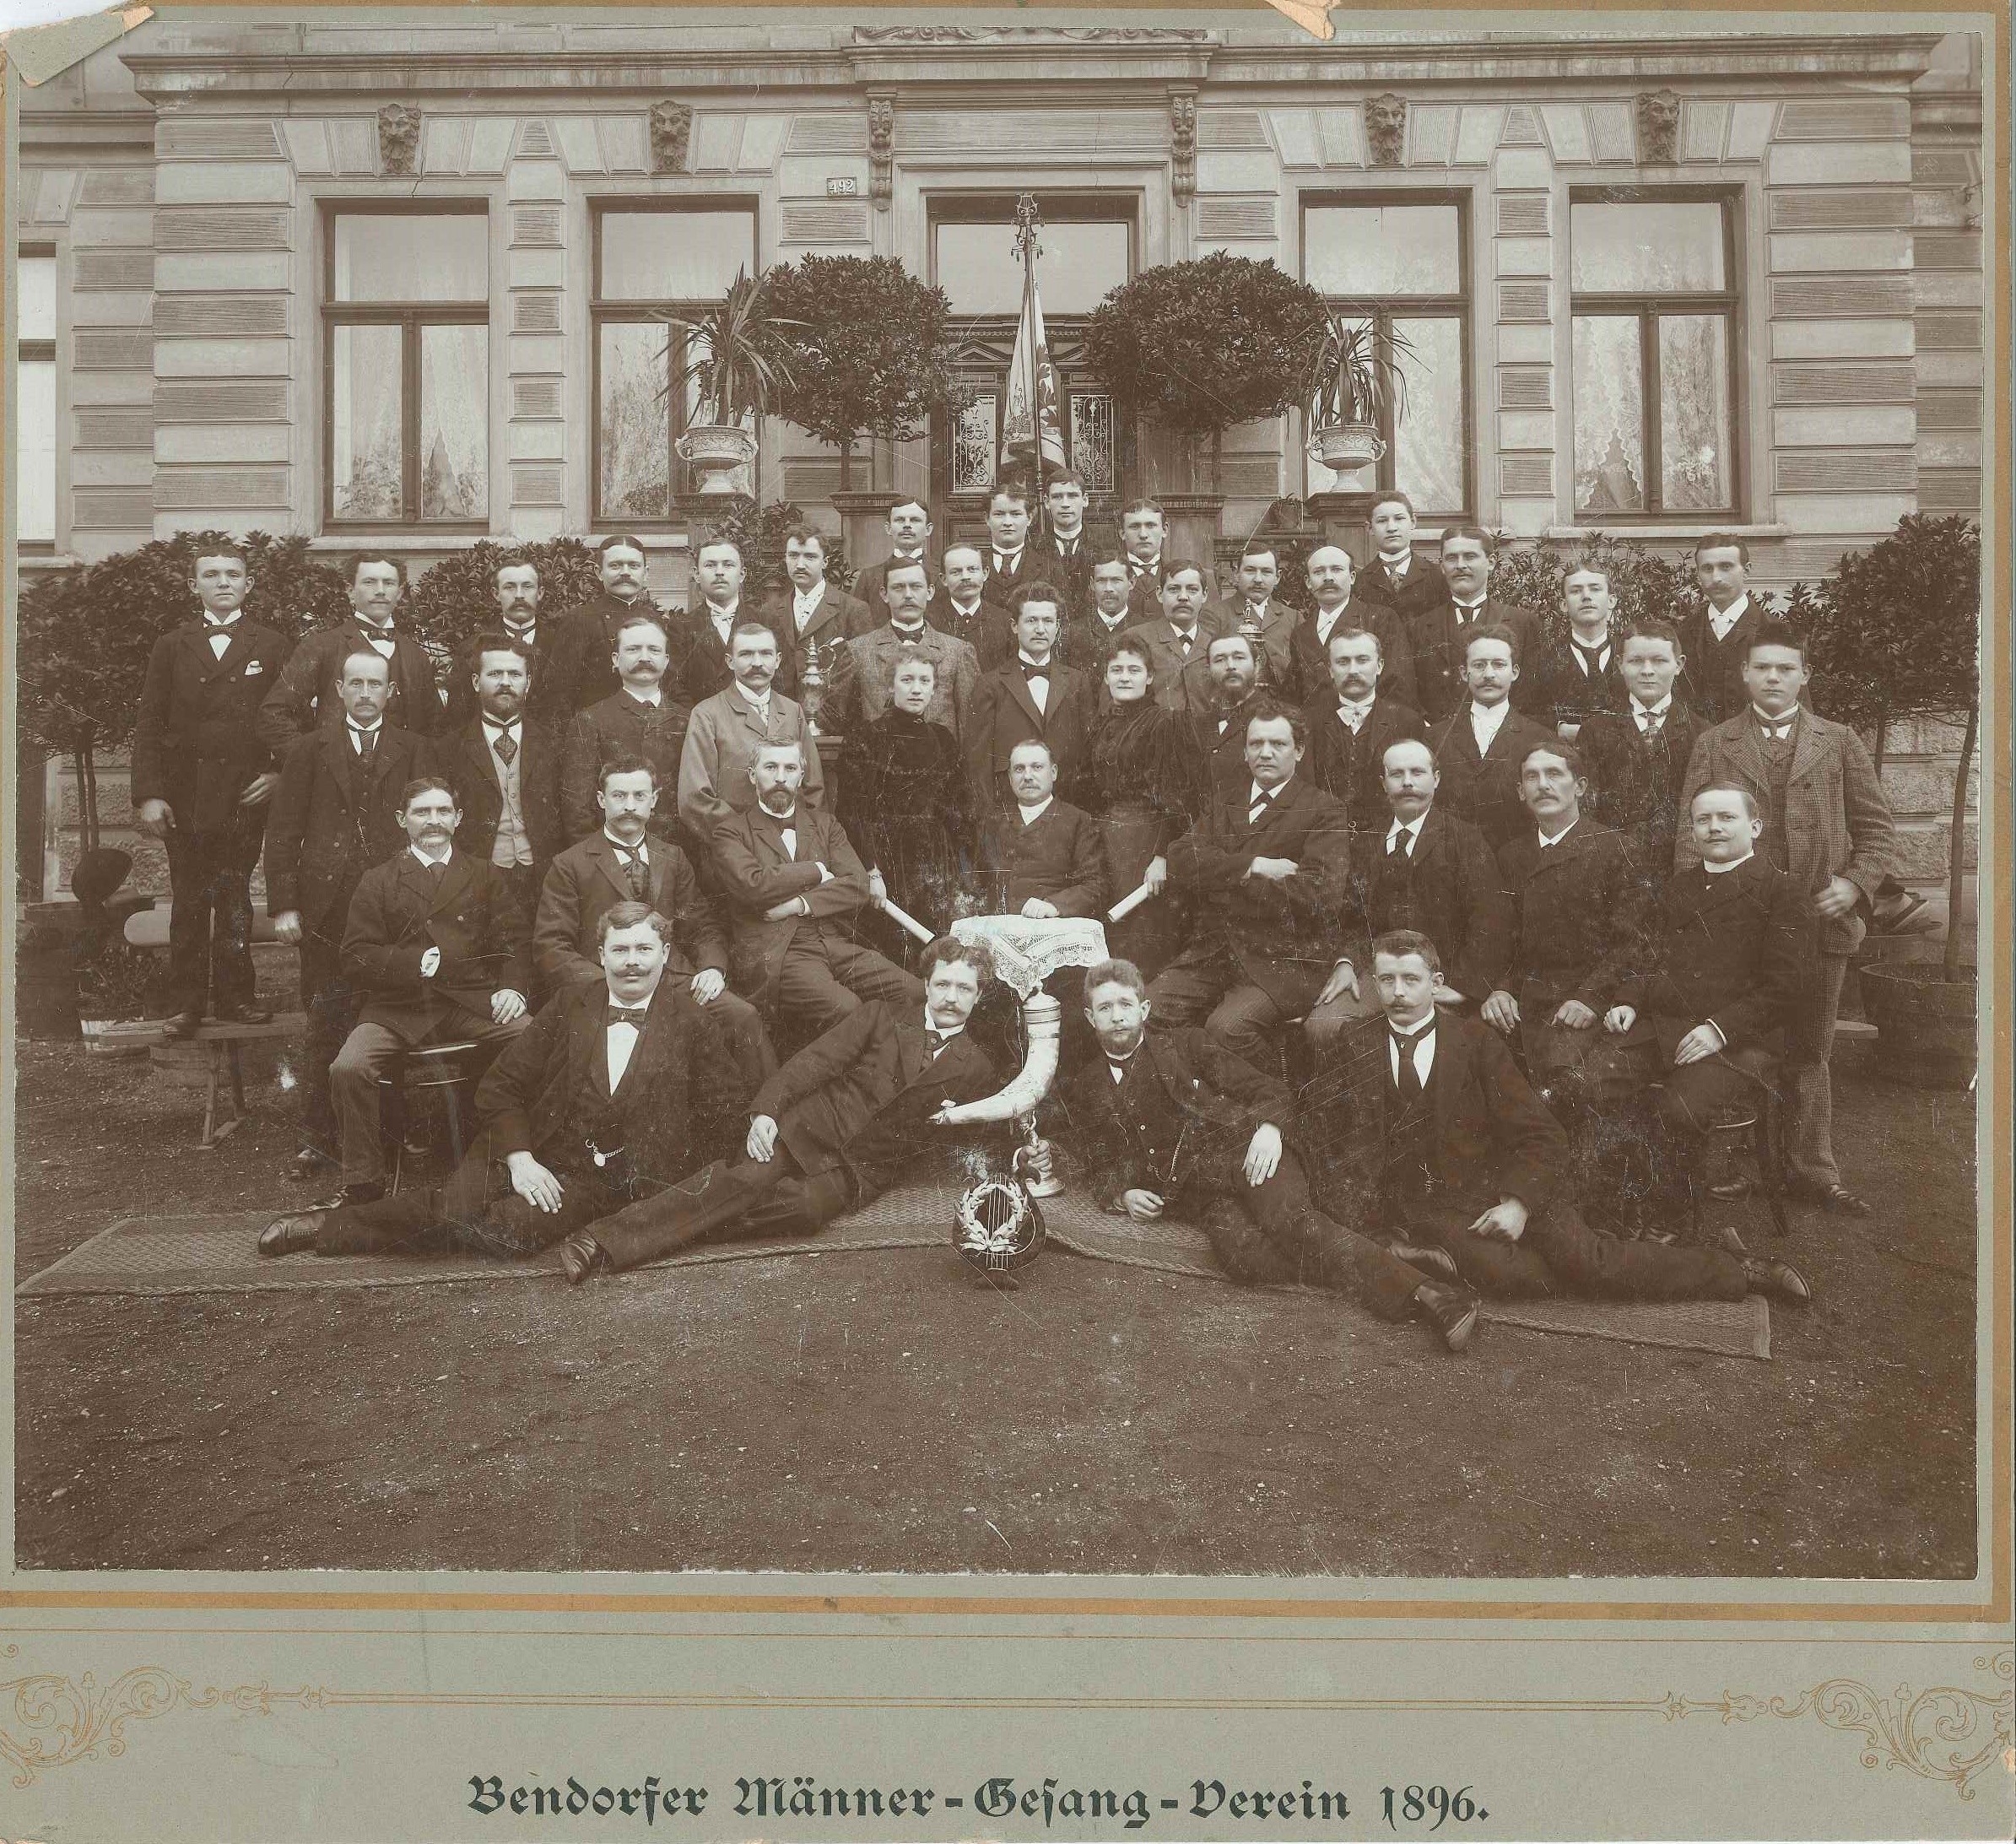 Bendorfer Männer-Gesang-Verein, 1896 (REM CC BY-NC-SA)